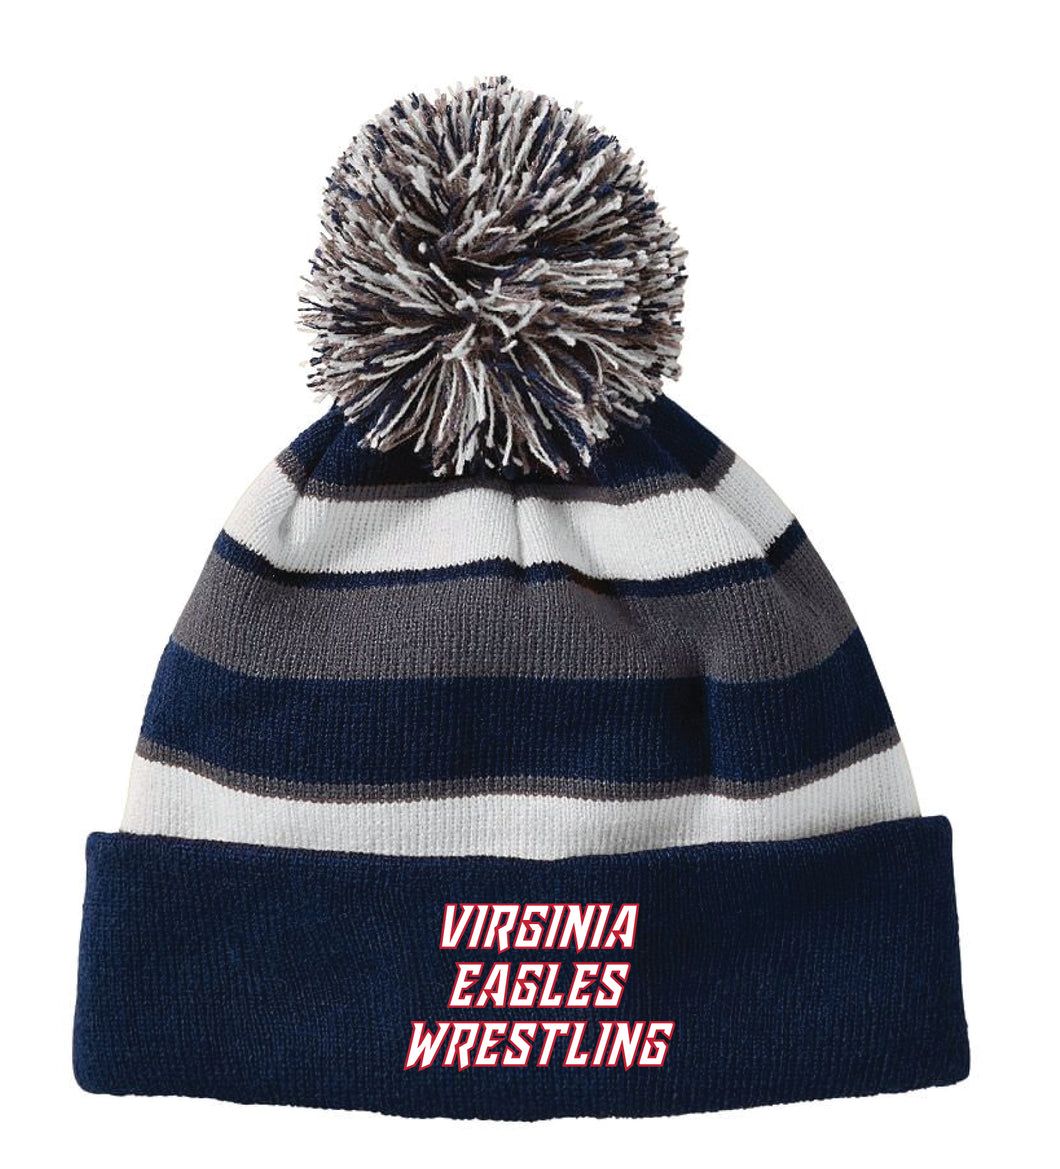 Virginia Eagles Wrestling Pom Beanie - Navy - 5KounT2018